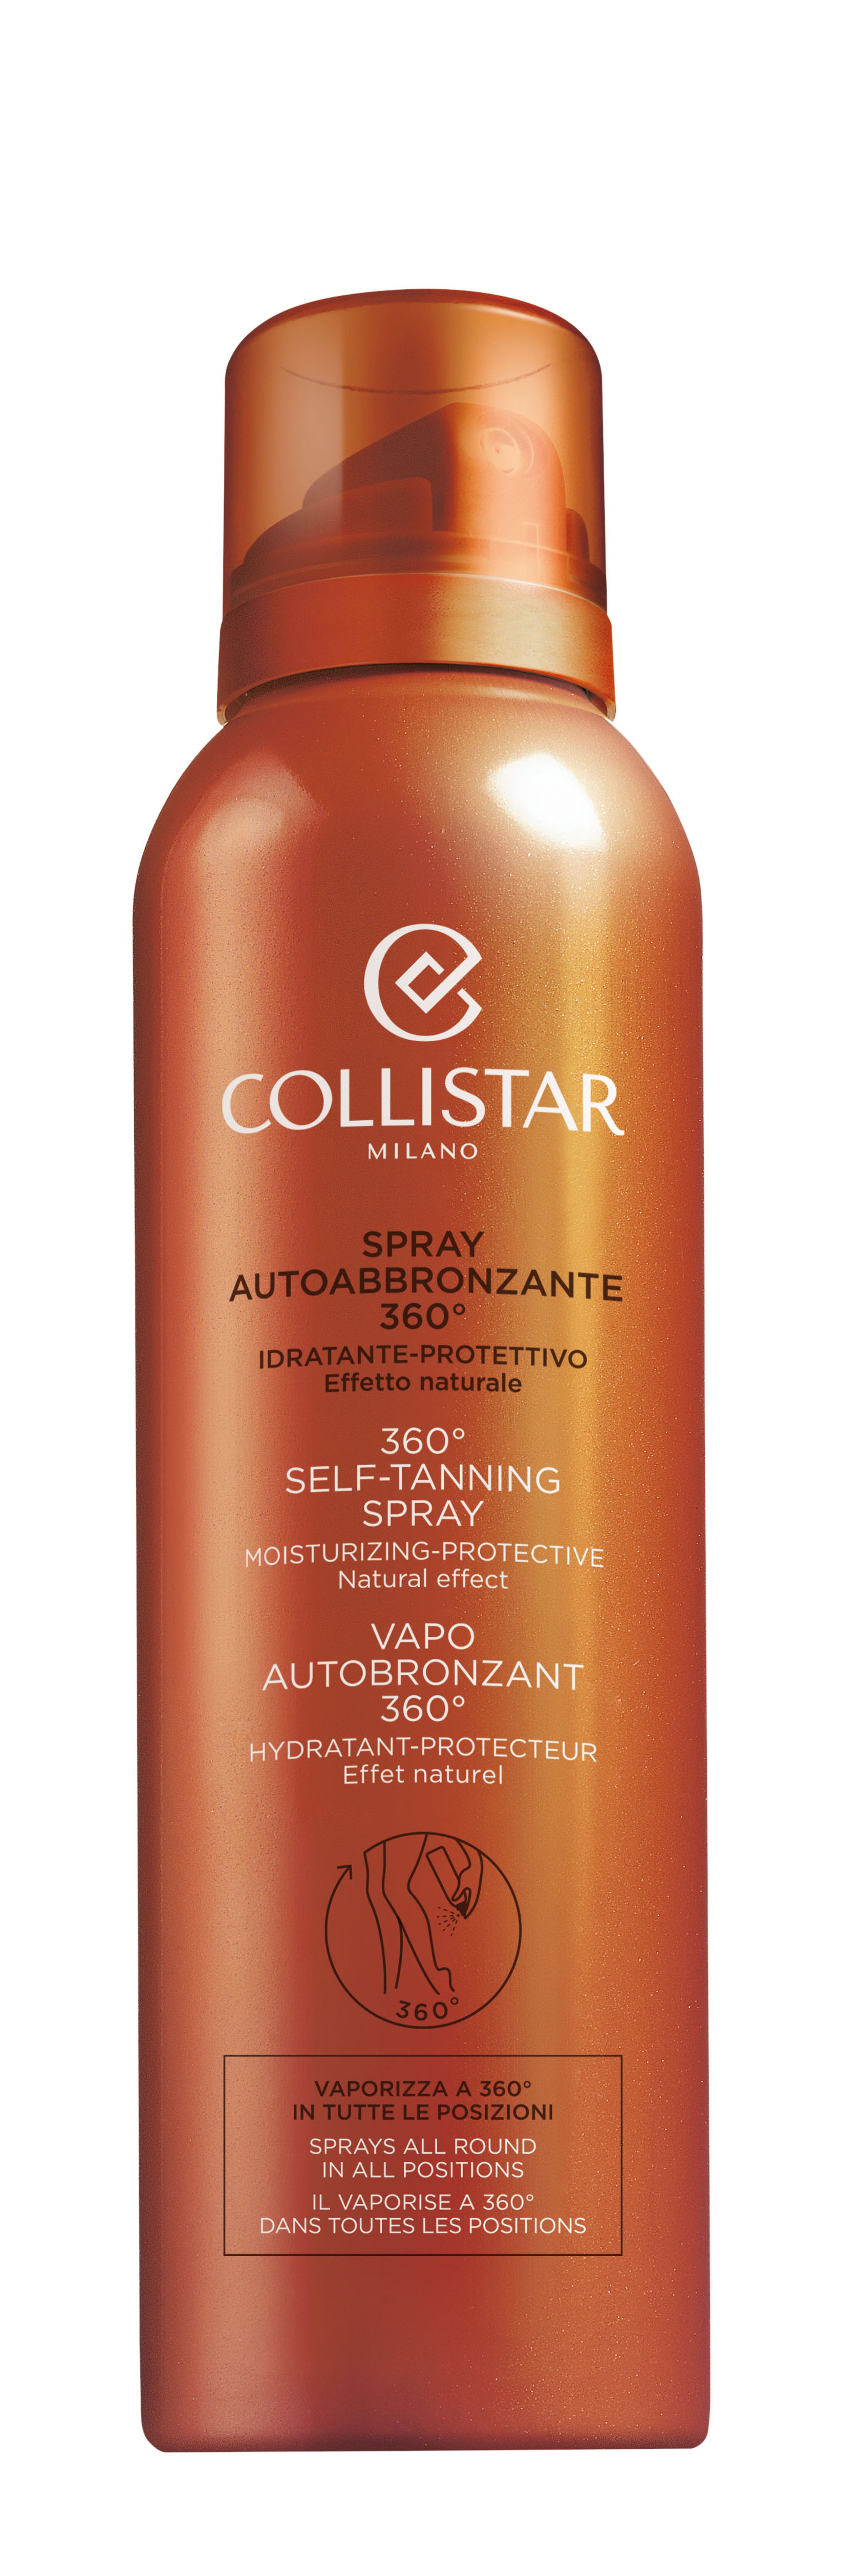 Collistar Spray Autoabbronzante 360° 2